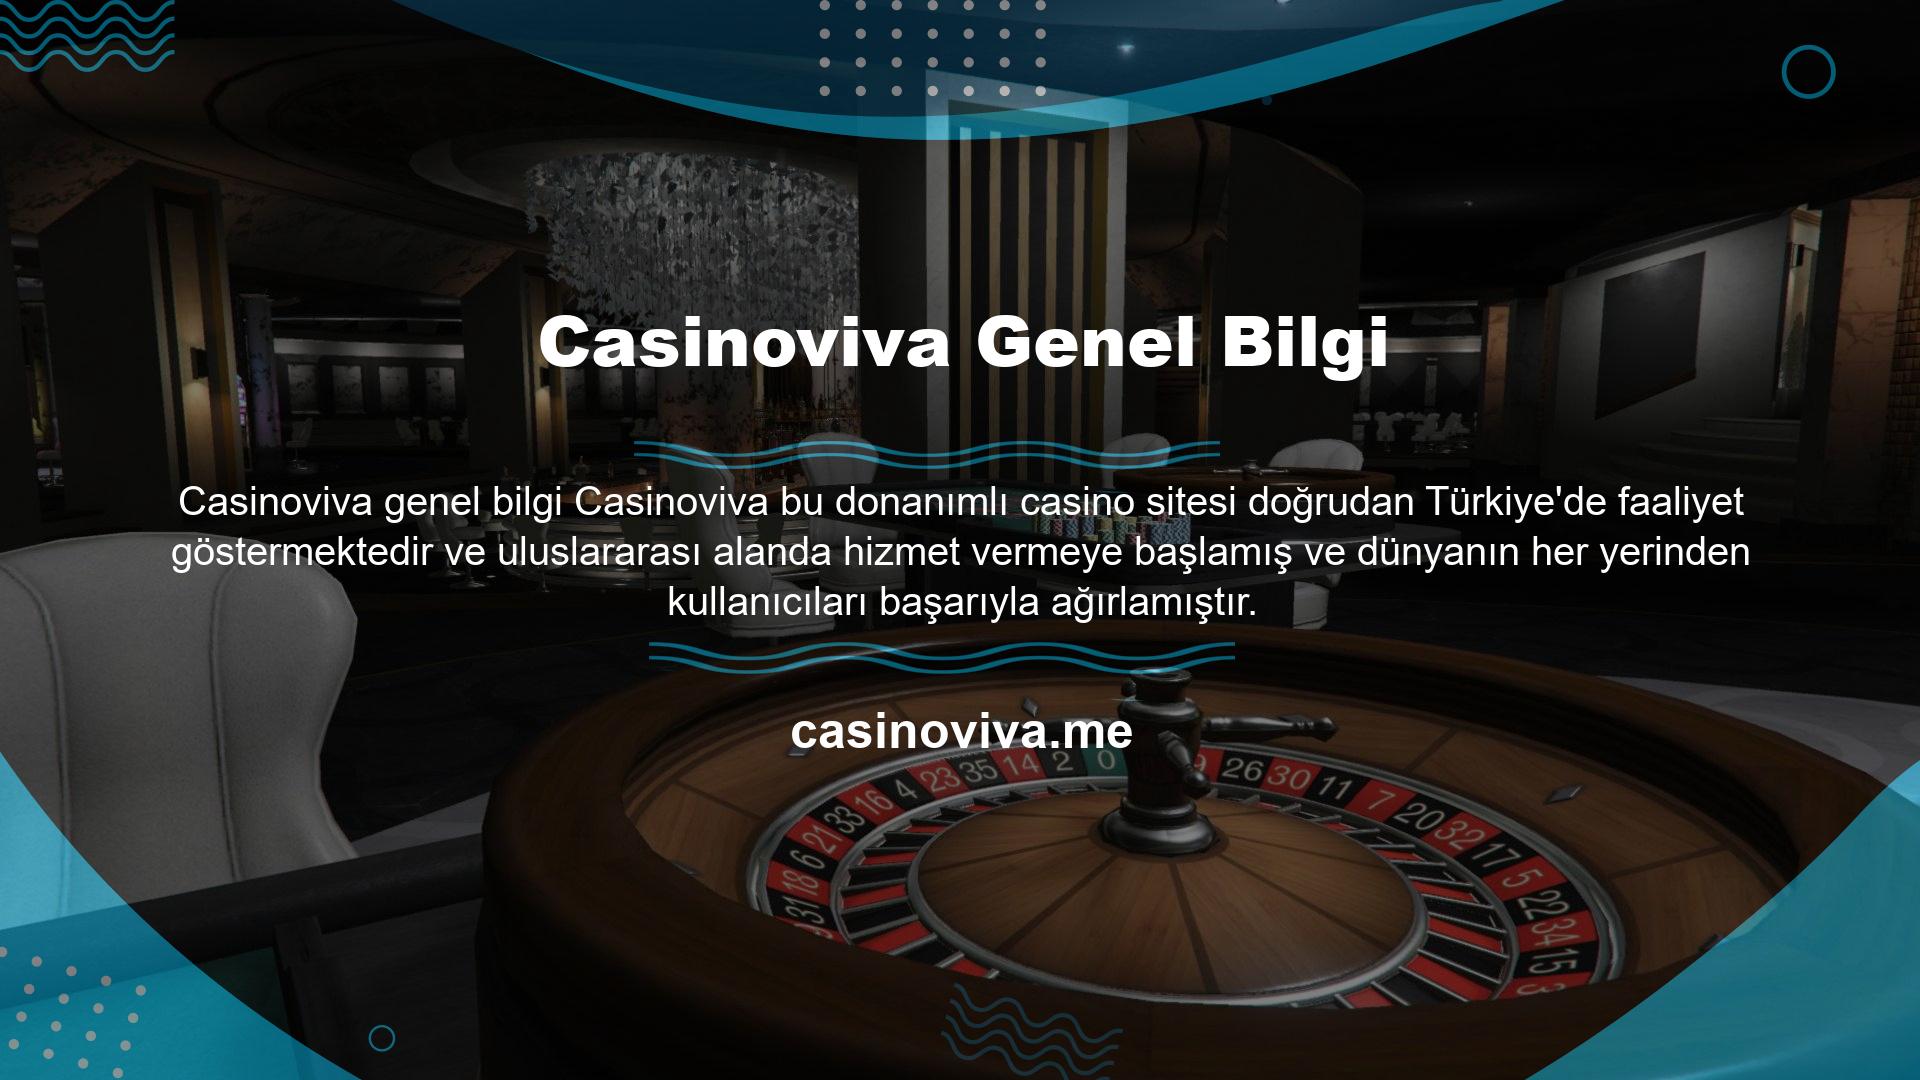 Casinoviva Genel Bilgi